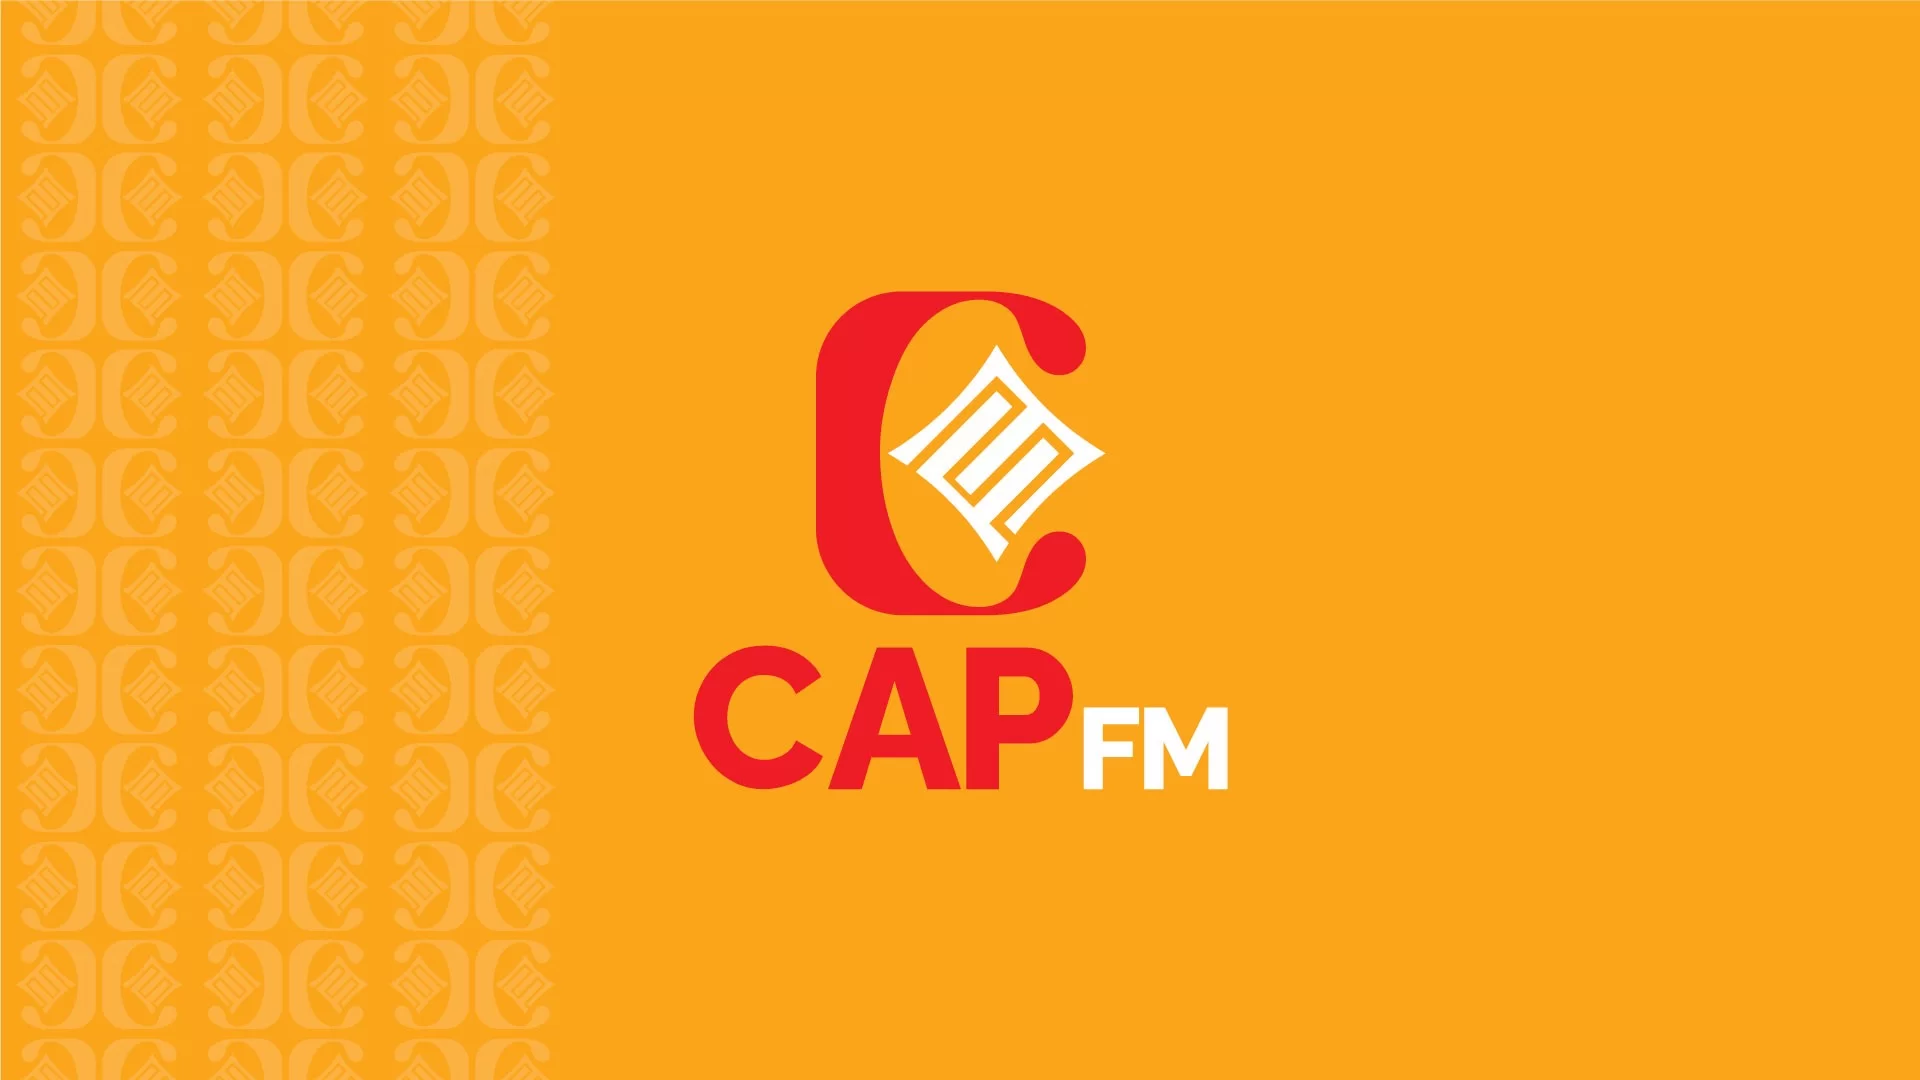 capital fm branding15